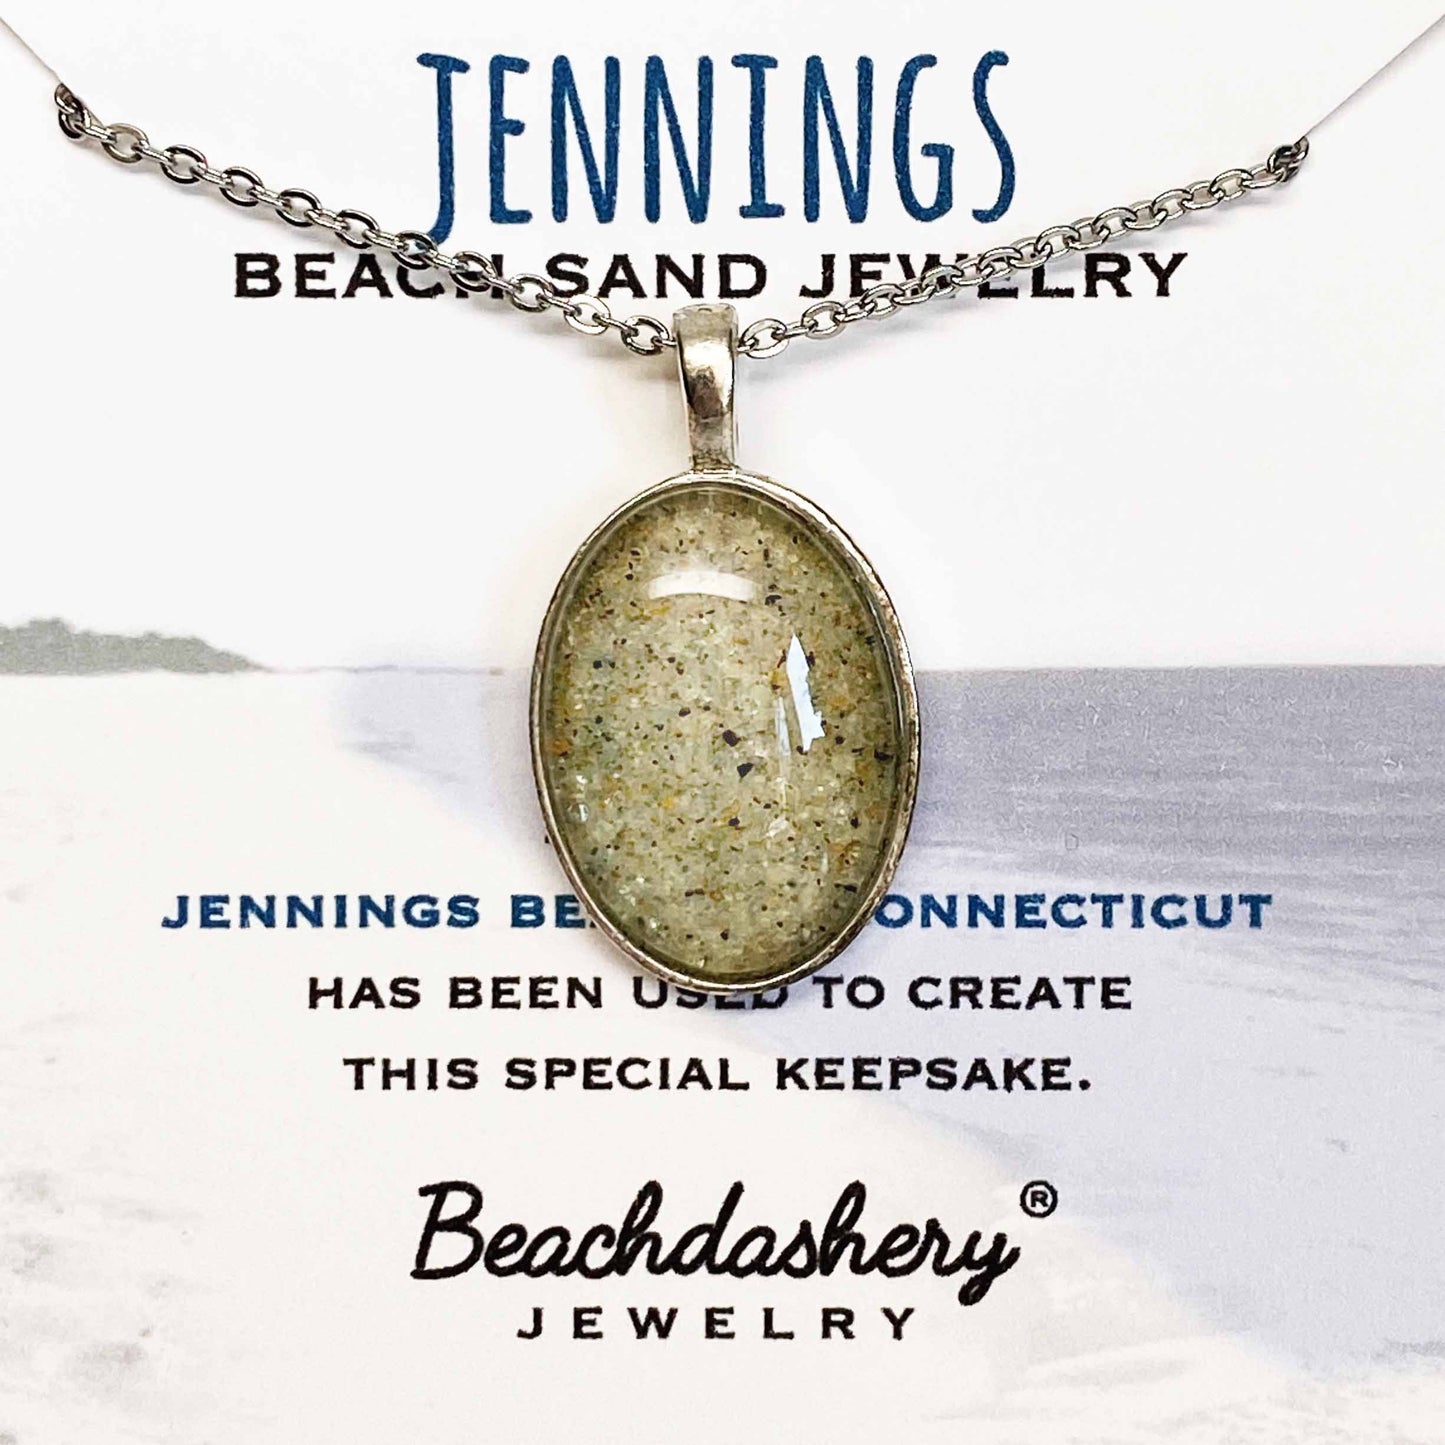 Jennings Beach Connecticut Sand Jewelry Beachdashery® Jewelry